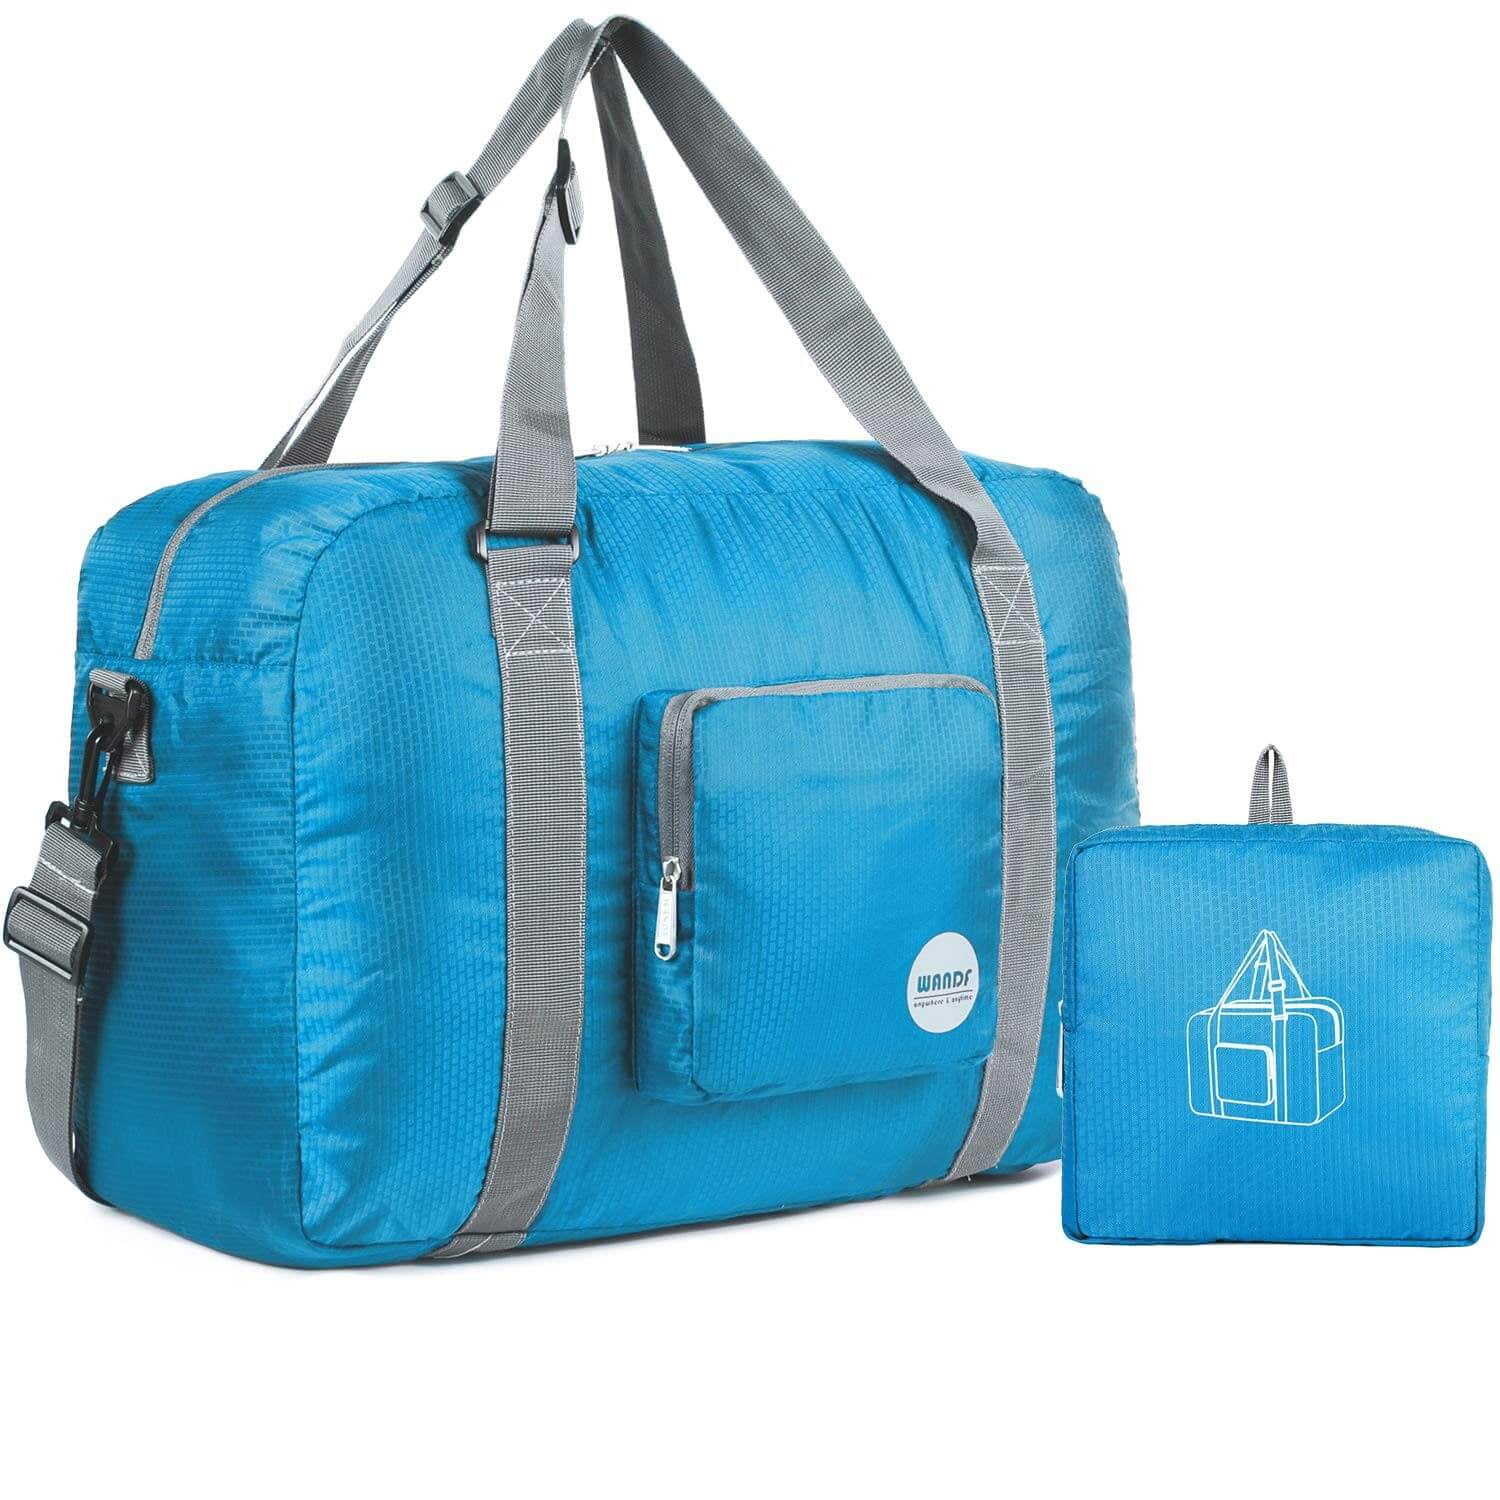 Quadra Holdall Duffle Bag 34 Litre Large Gym Sports Travel Luggage Carry QD45 